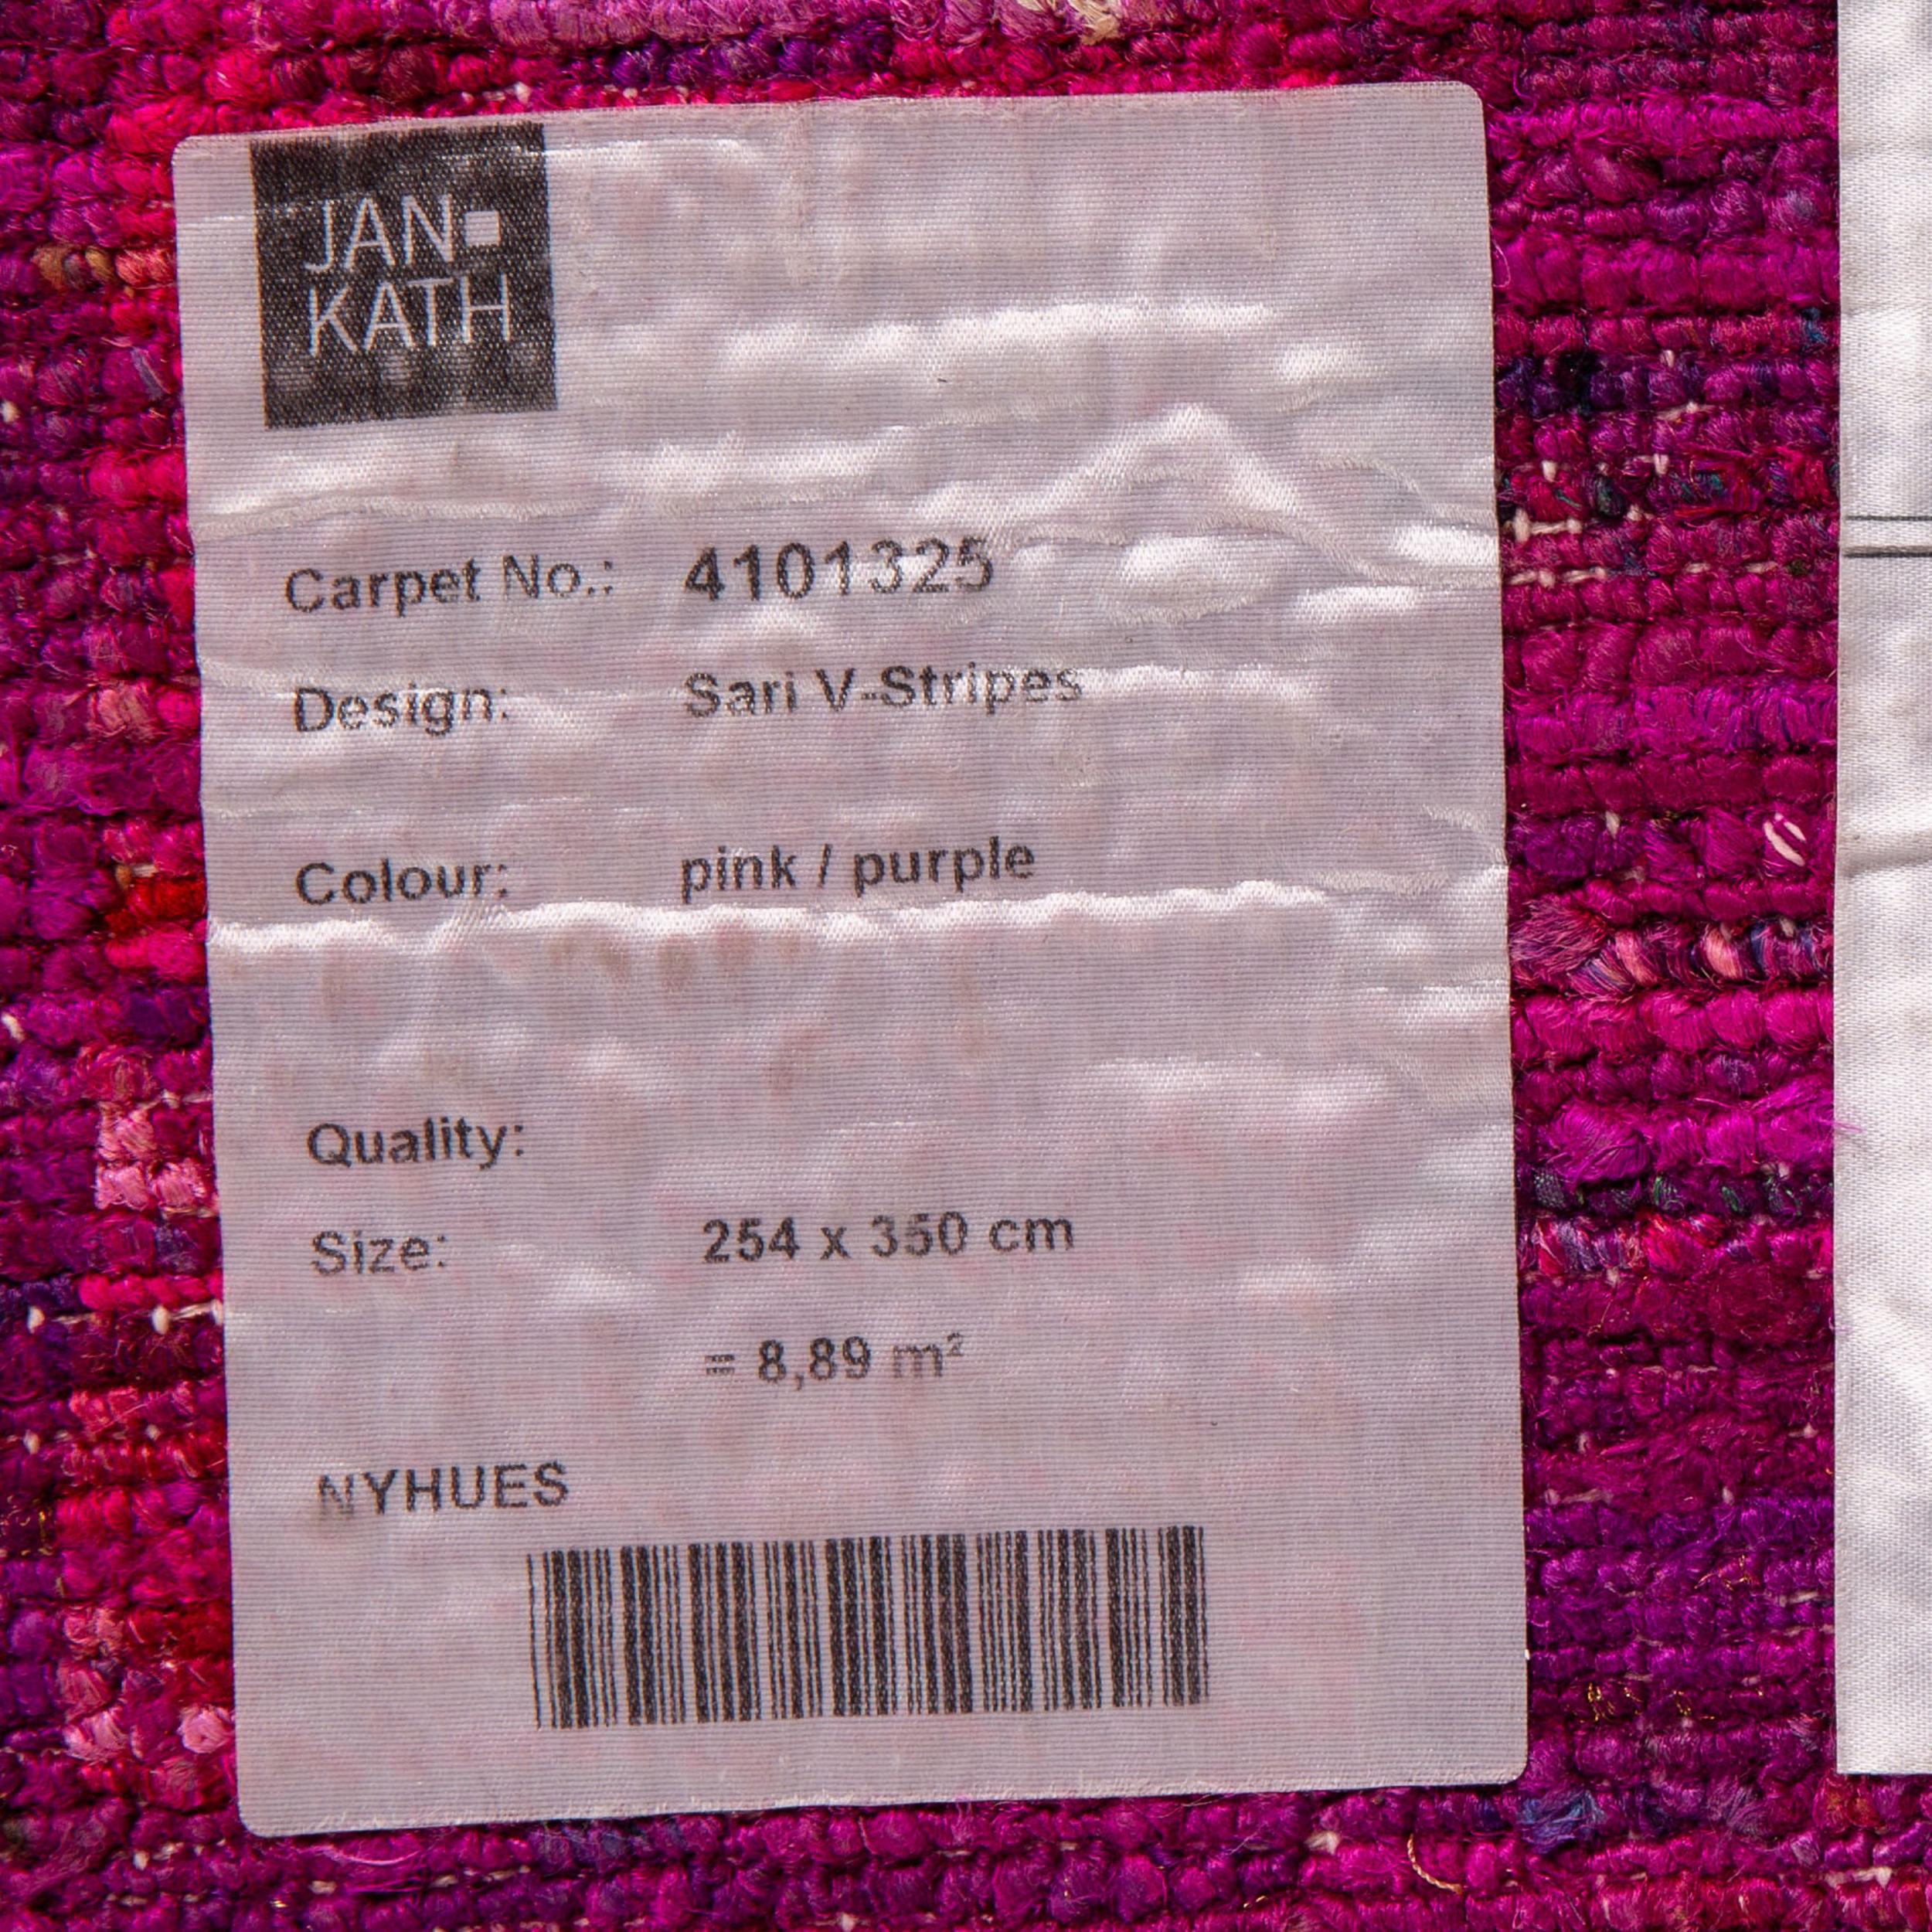 European Jan Kath Sari V-Stripes Silk Carpet Silk Pink For Sale